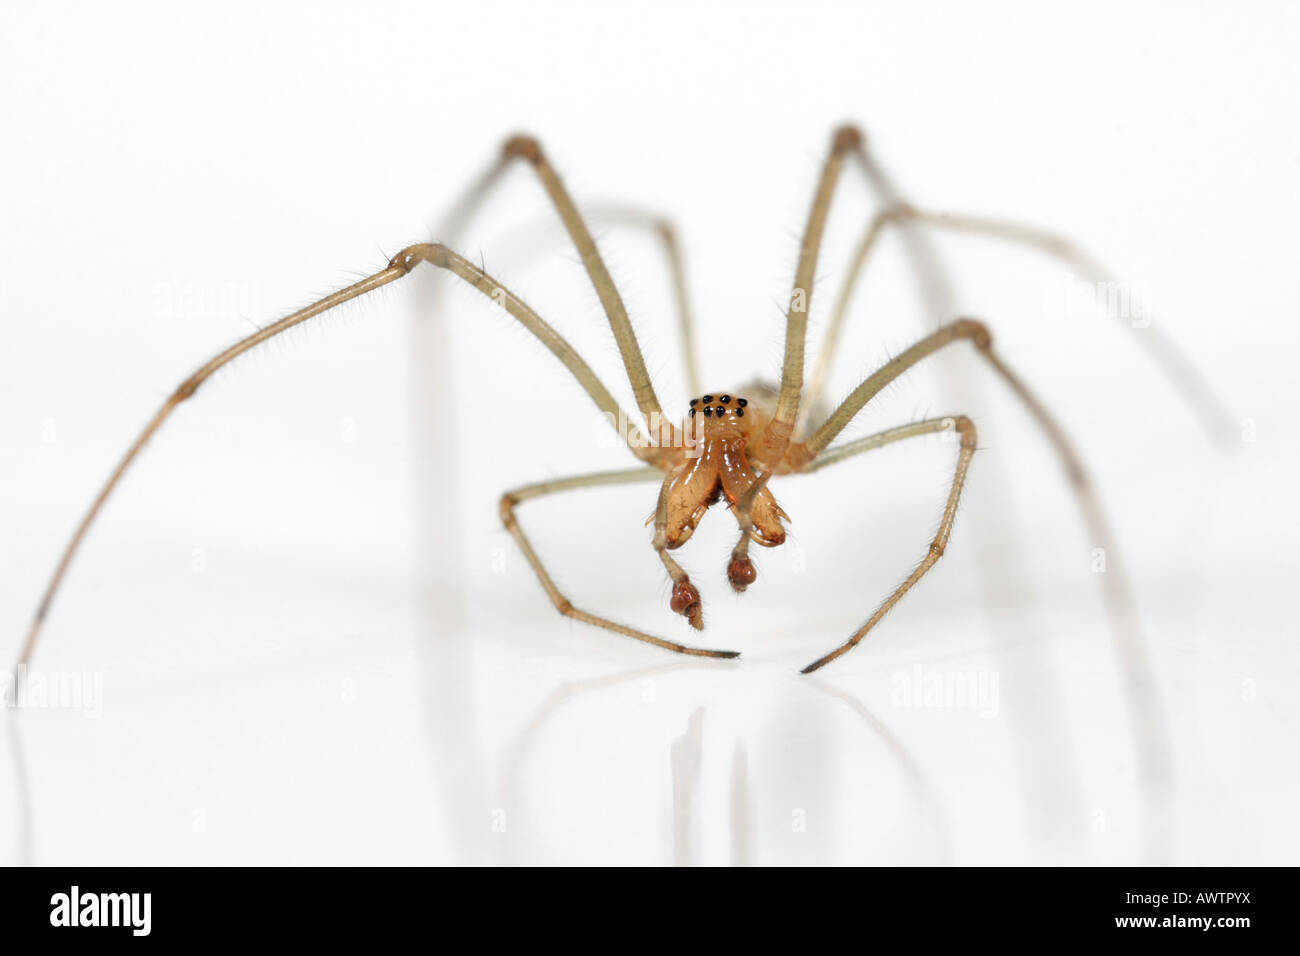 Head-on view of a male Tetragnatha extensa spider, family Tetragnathidae, on white background. Stock Photo